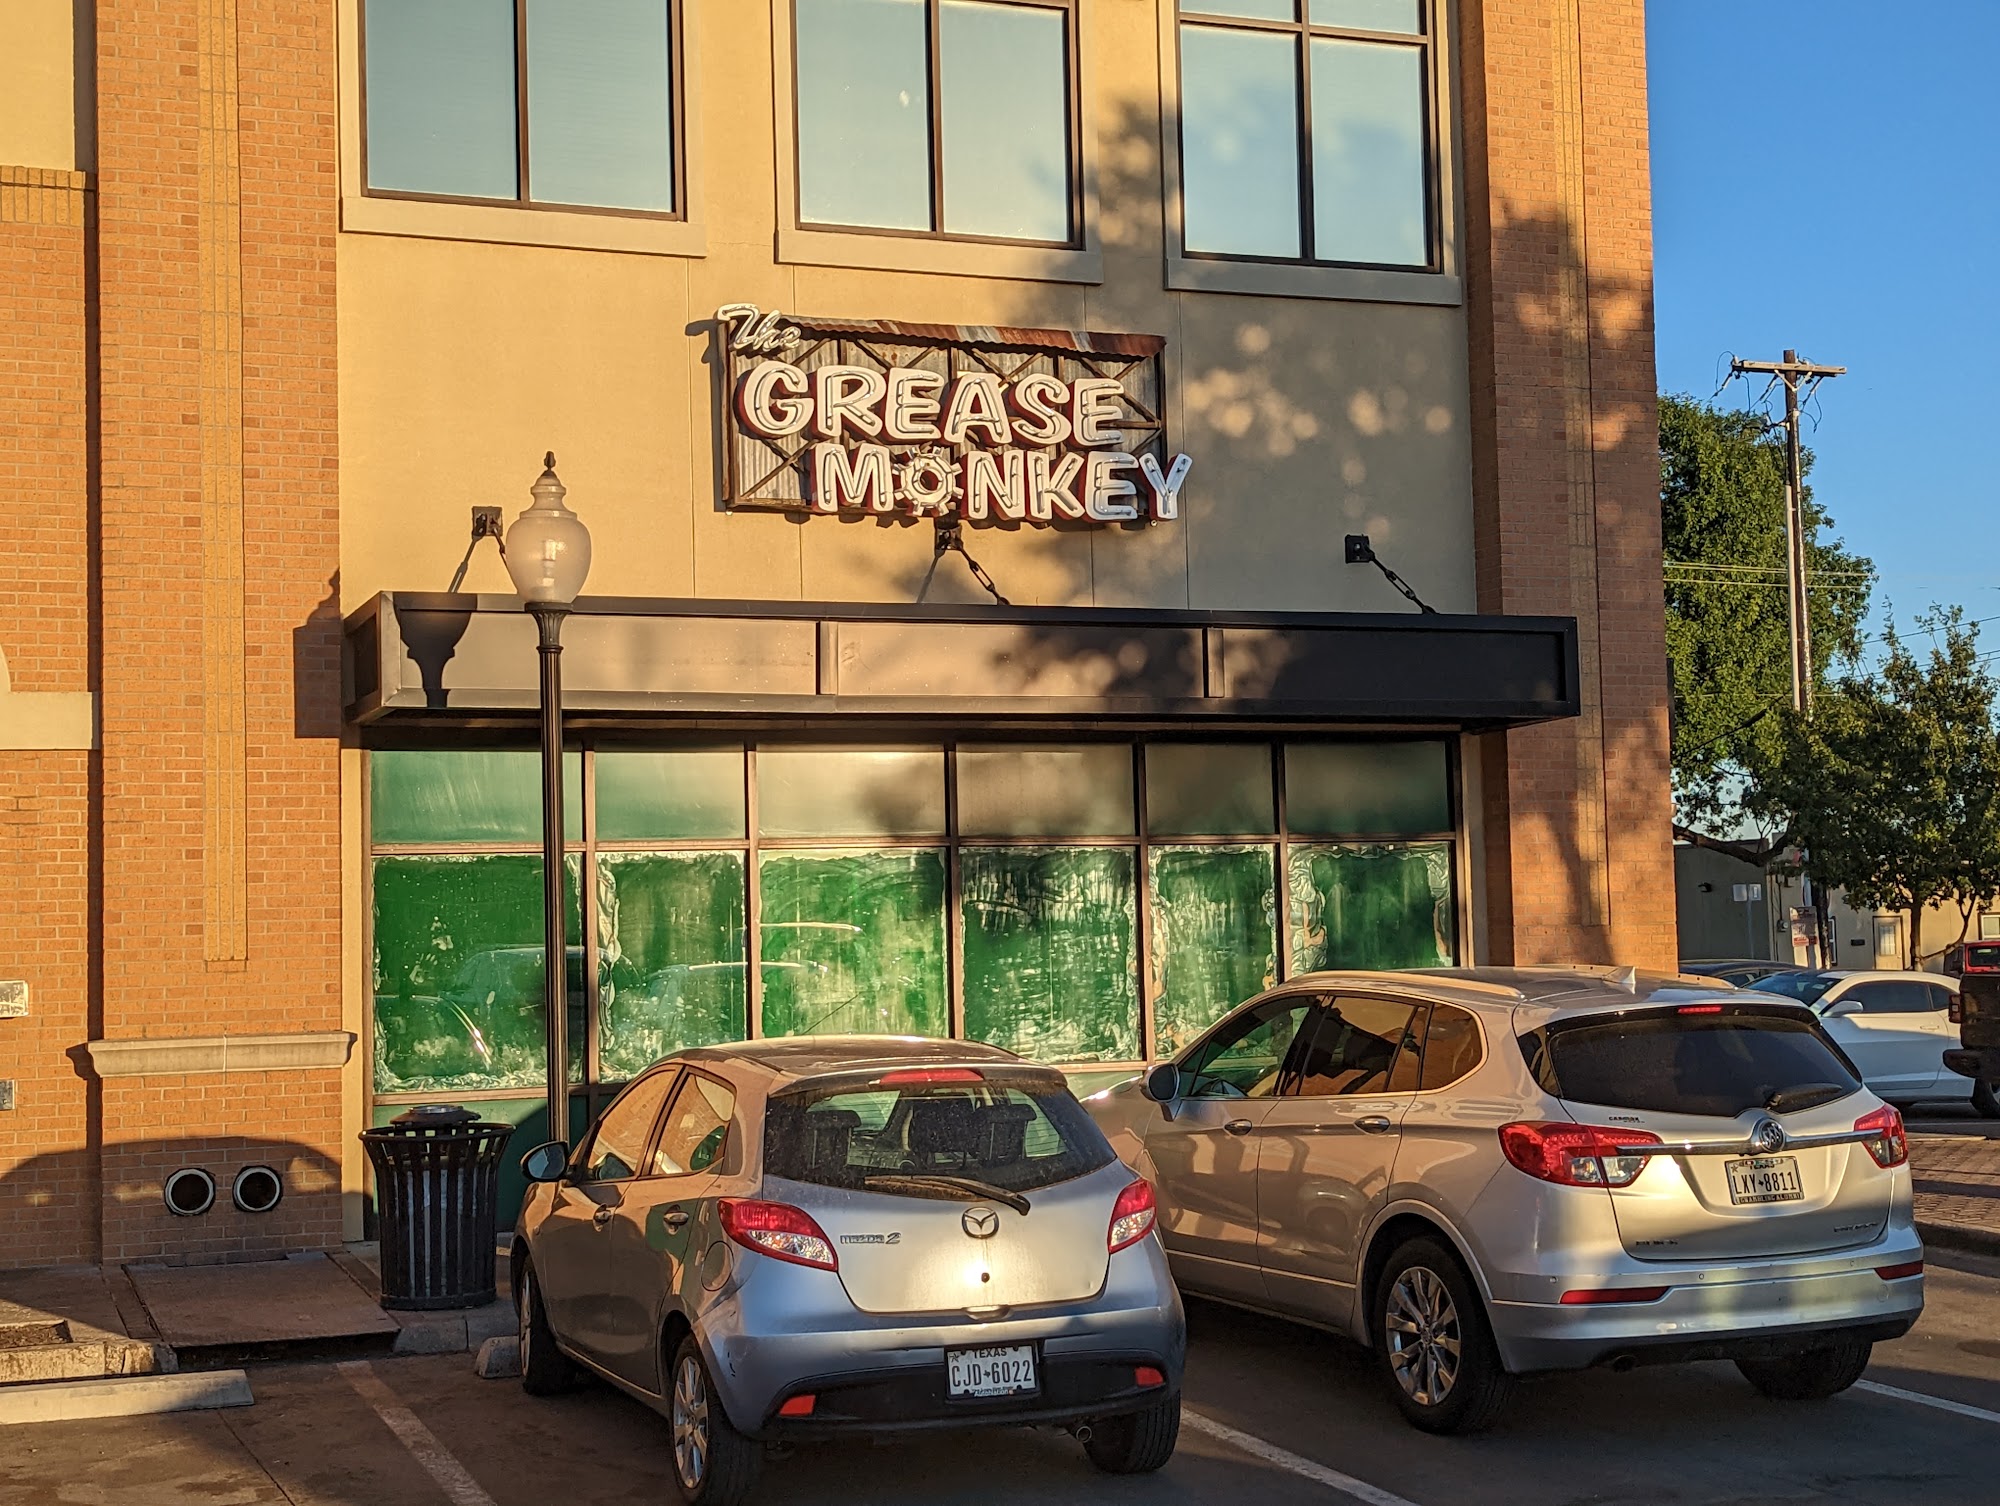 Grease Monkey Burger Shop